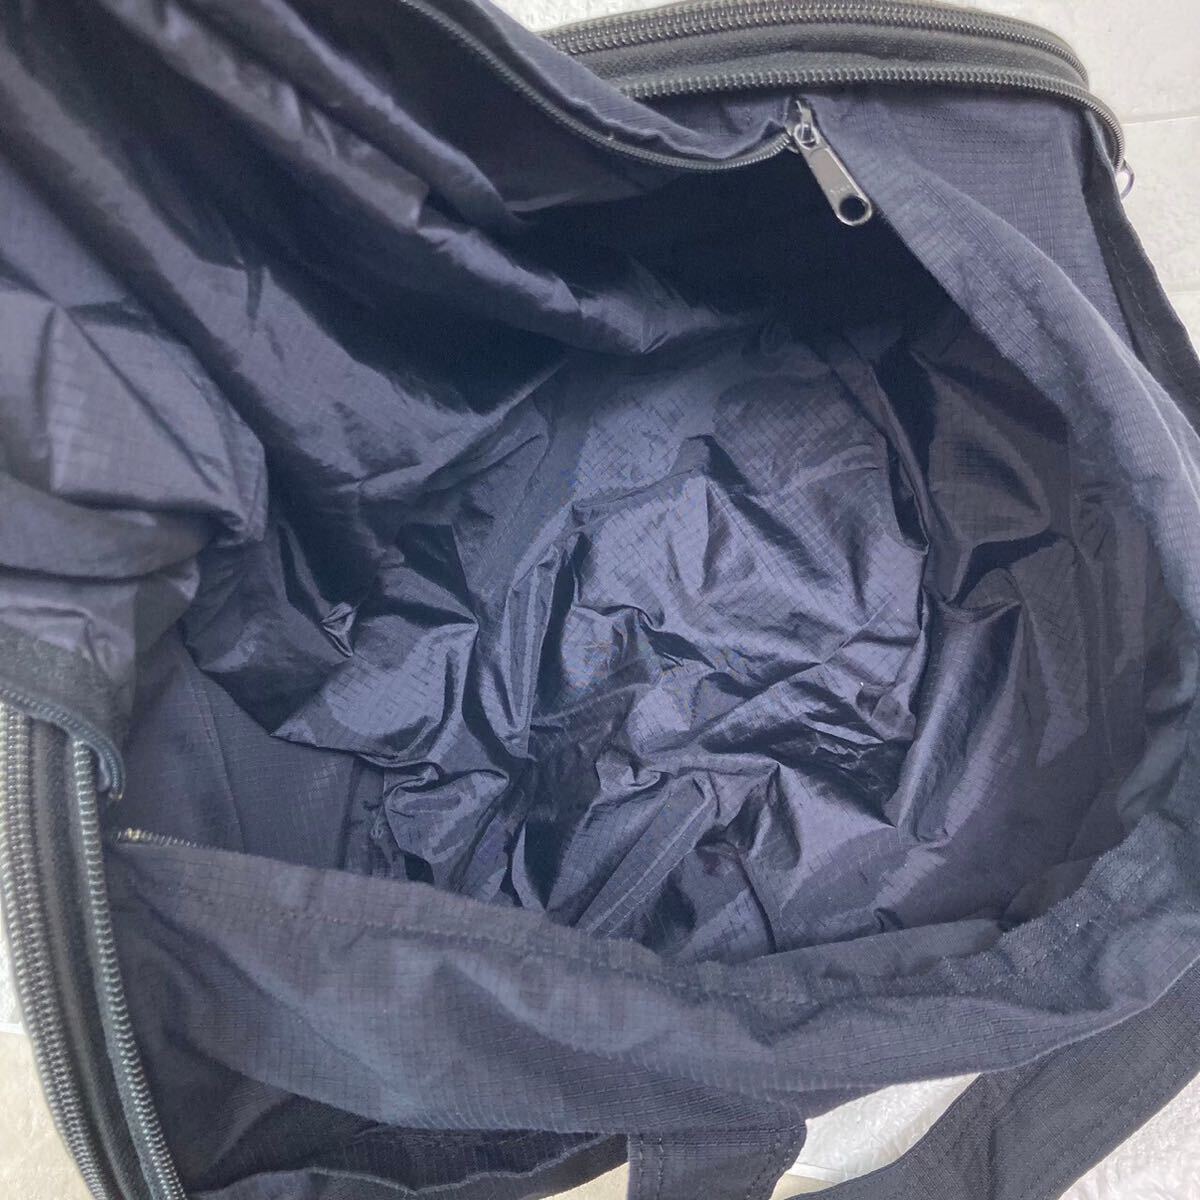  Porter × Disney collaboration Boston bag nylon folding black handbag tote bag rare rare 